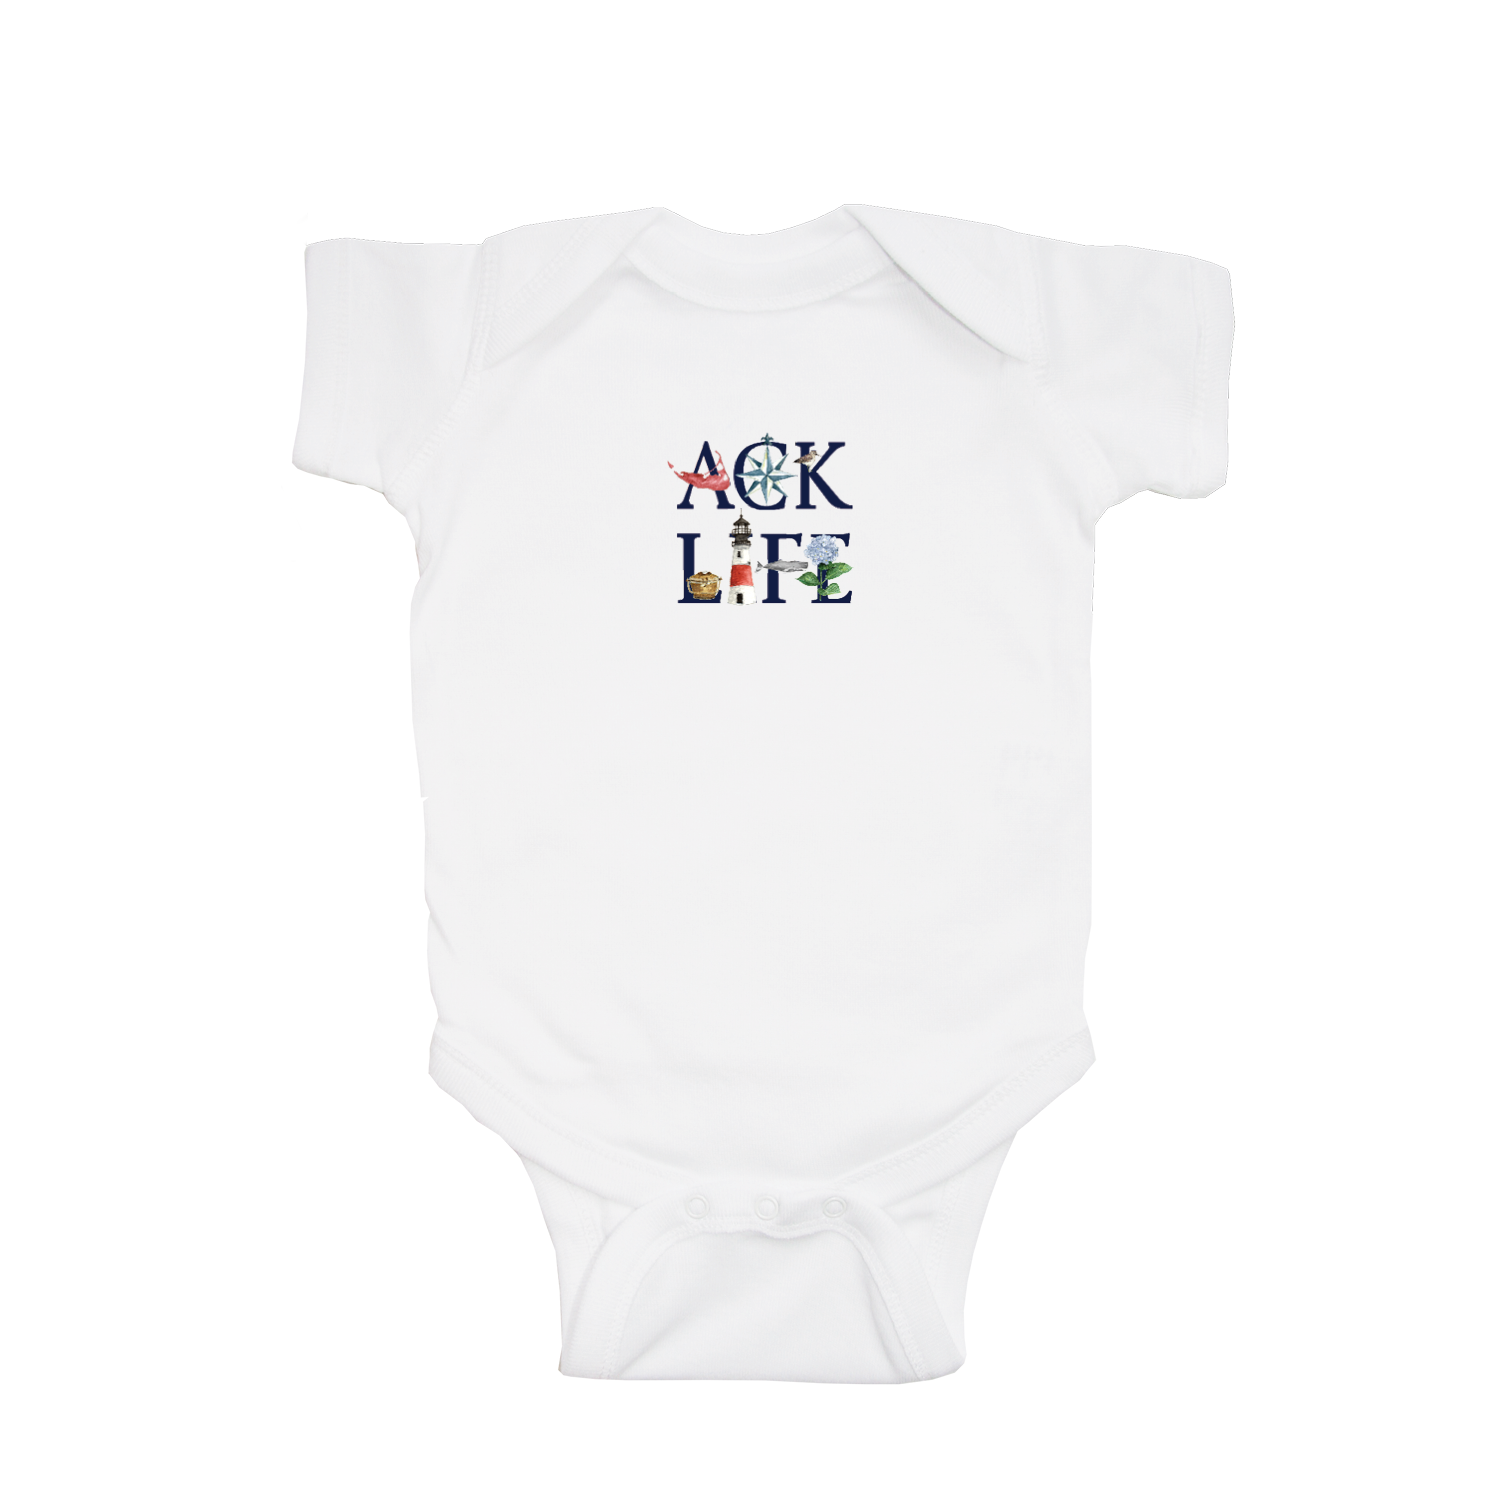 ACK LIFE Nantucket baby snap up short sleeve